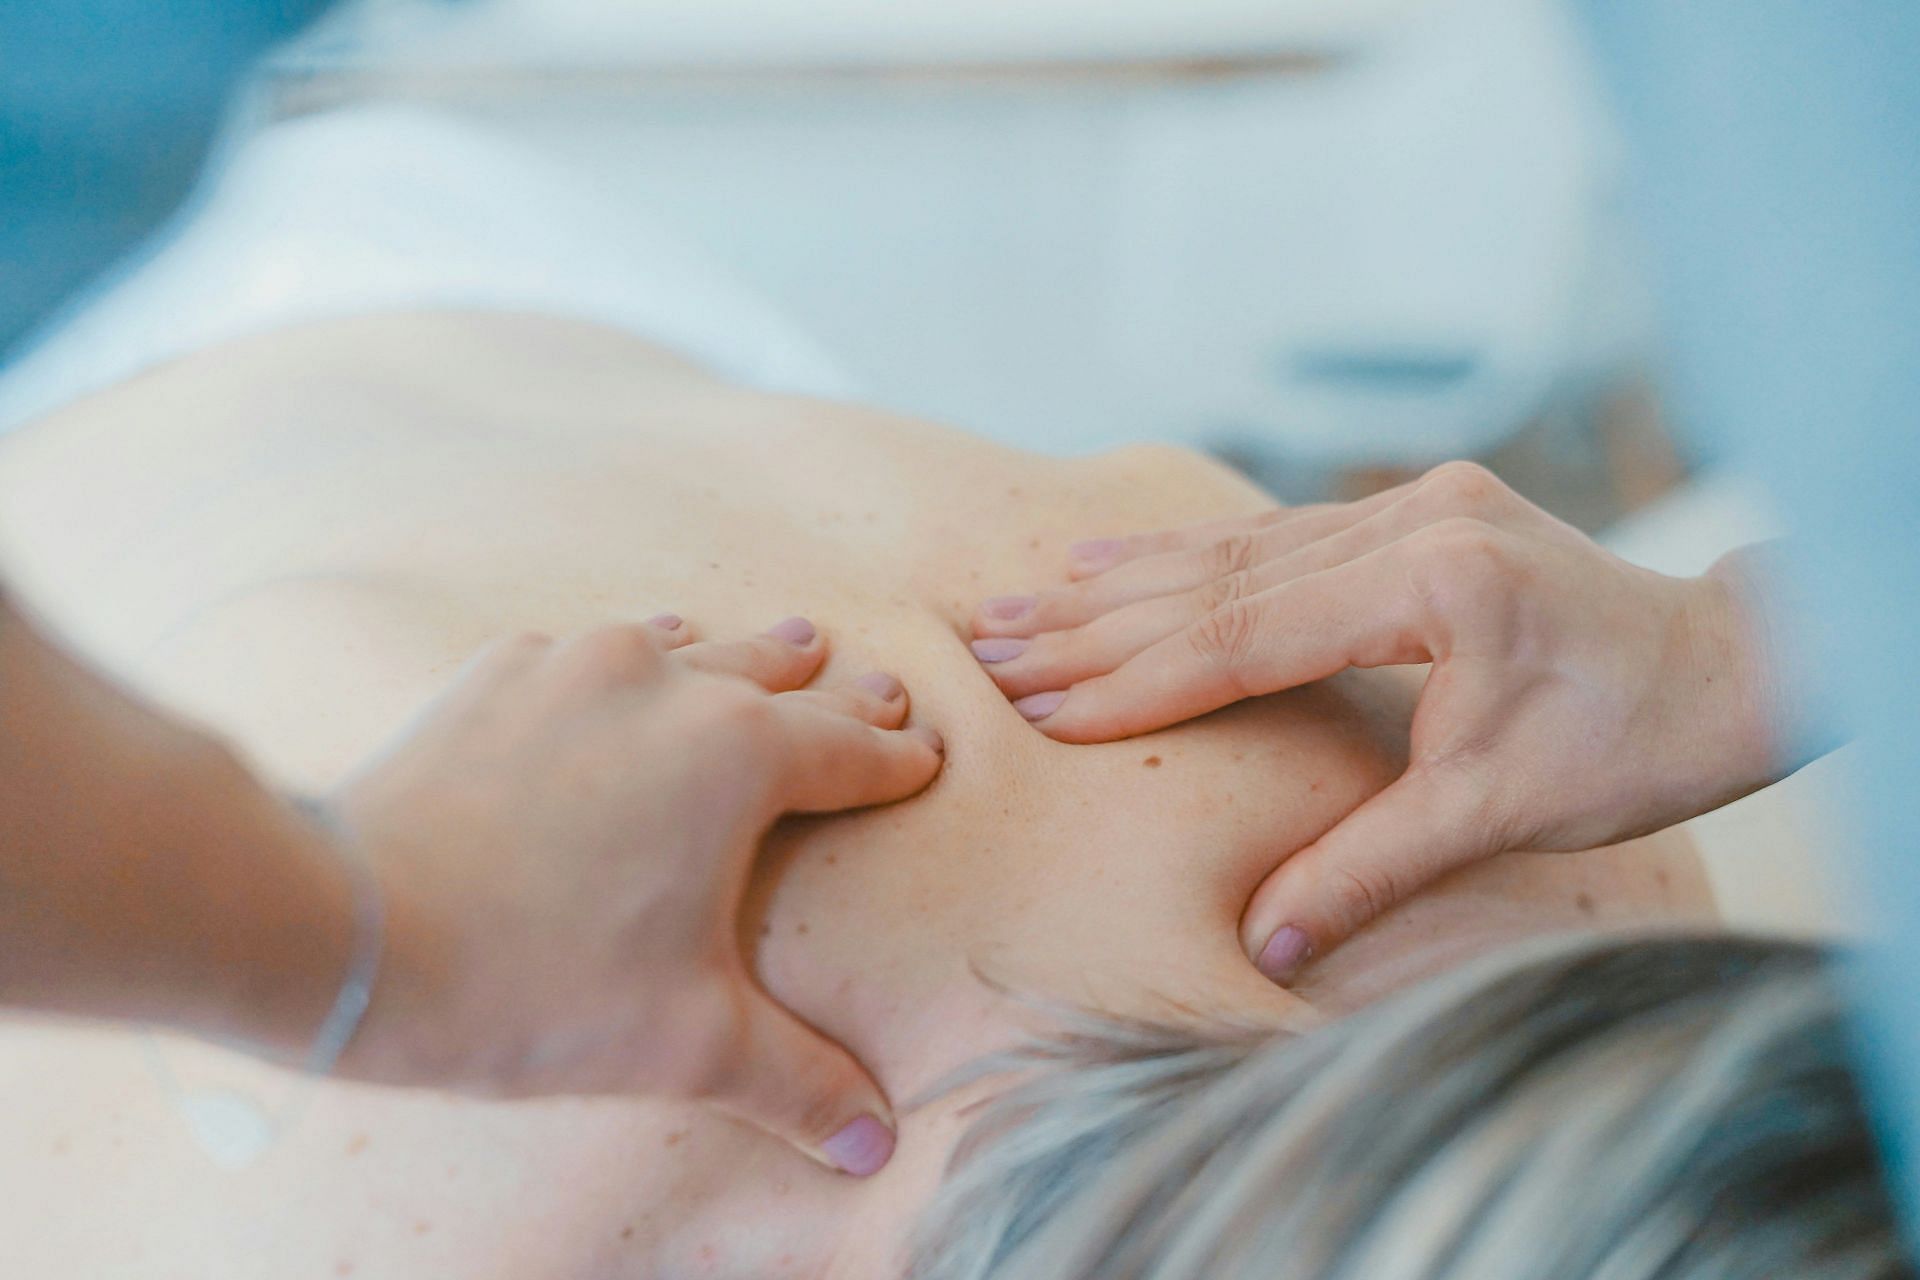 Massage can provide relief (Image by Toa Heftiba/Unsplash)